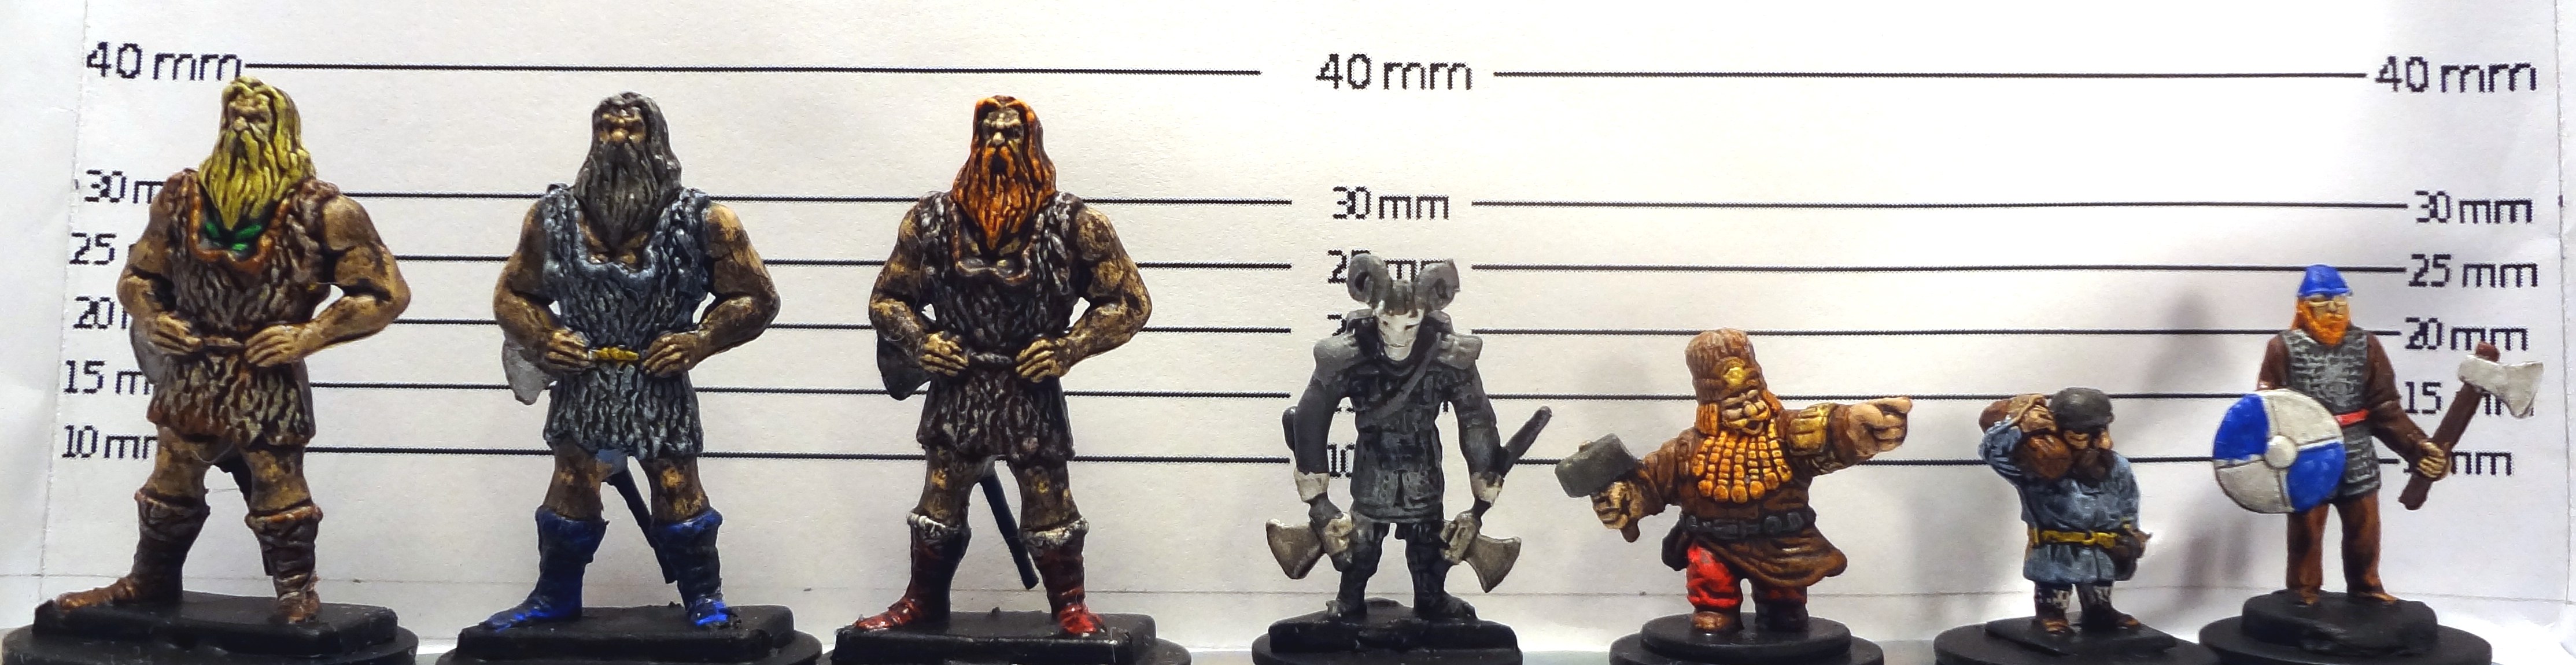 giants-dwarves.JPG